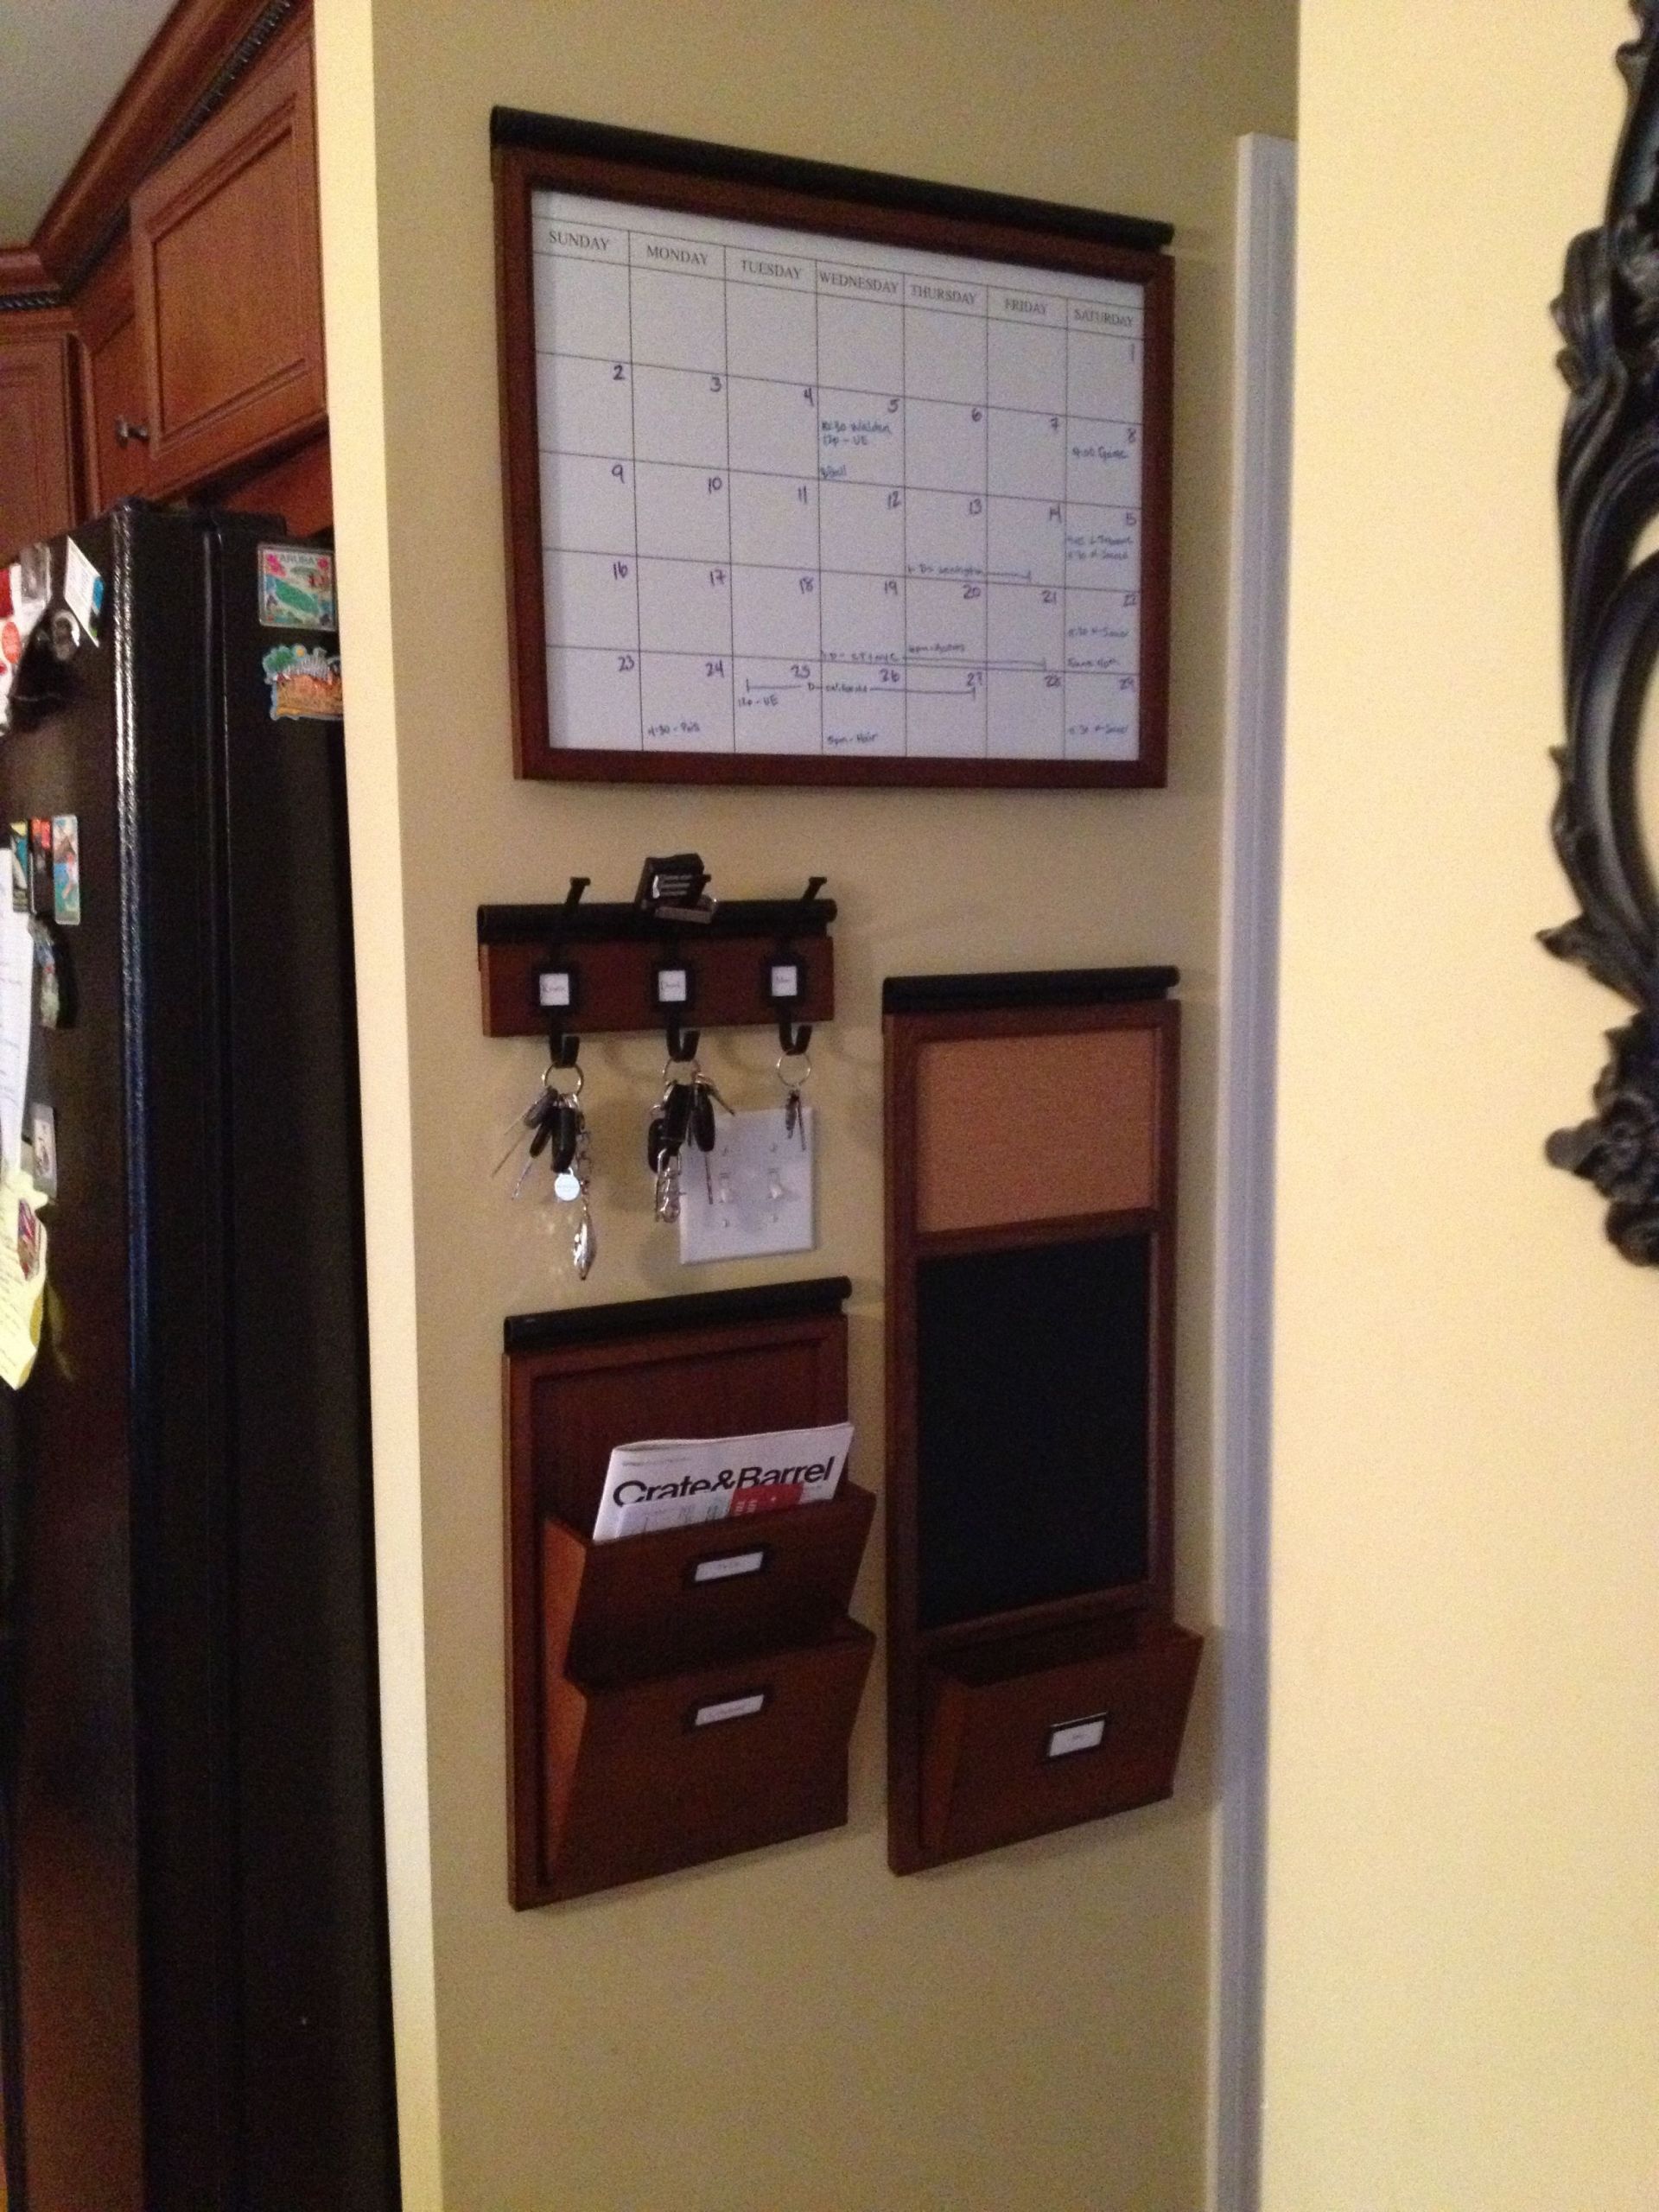 Kitchen Calendar Wall Organizer Luxury Home Quot Mand Centerquot Of Kitchen Calendar Wall Organizer Scaled 